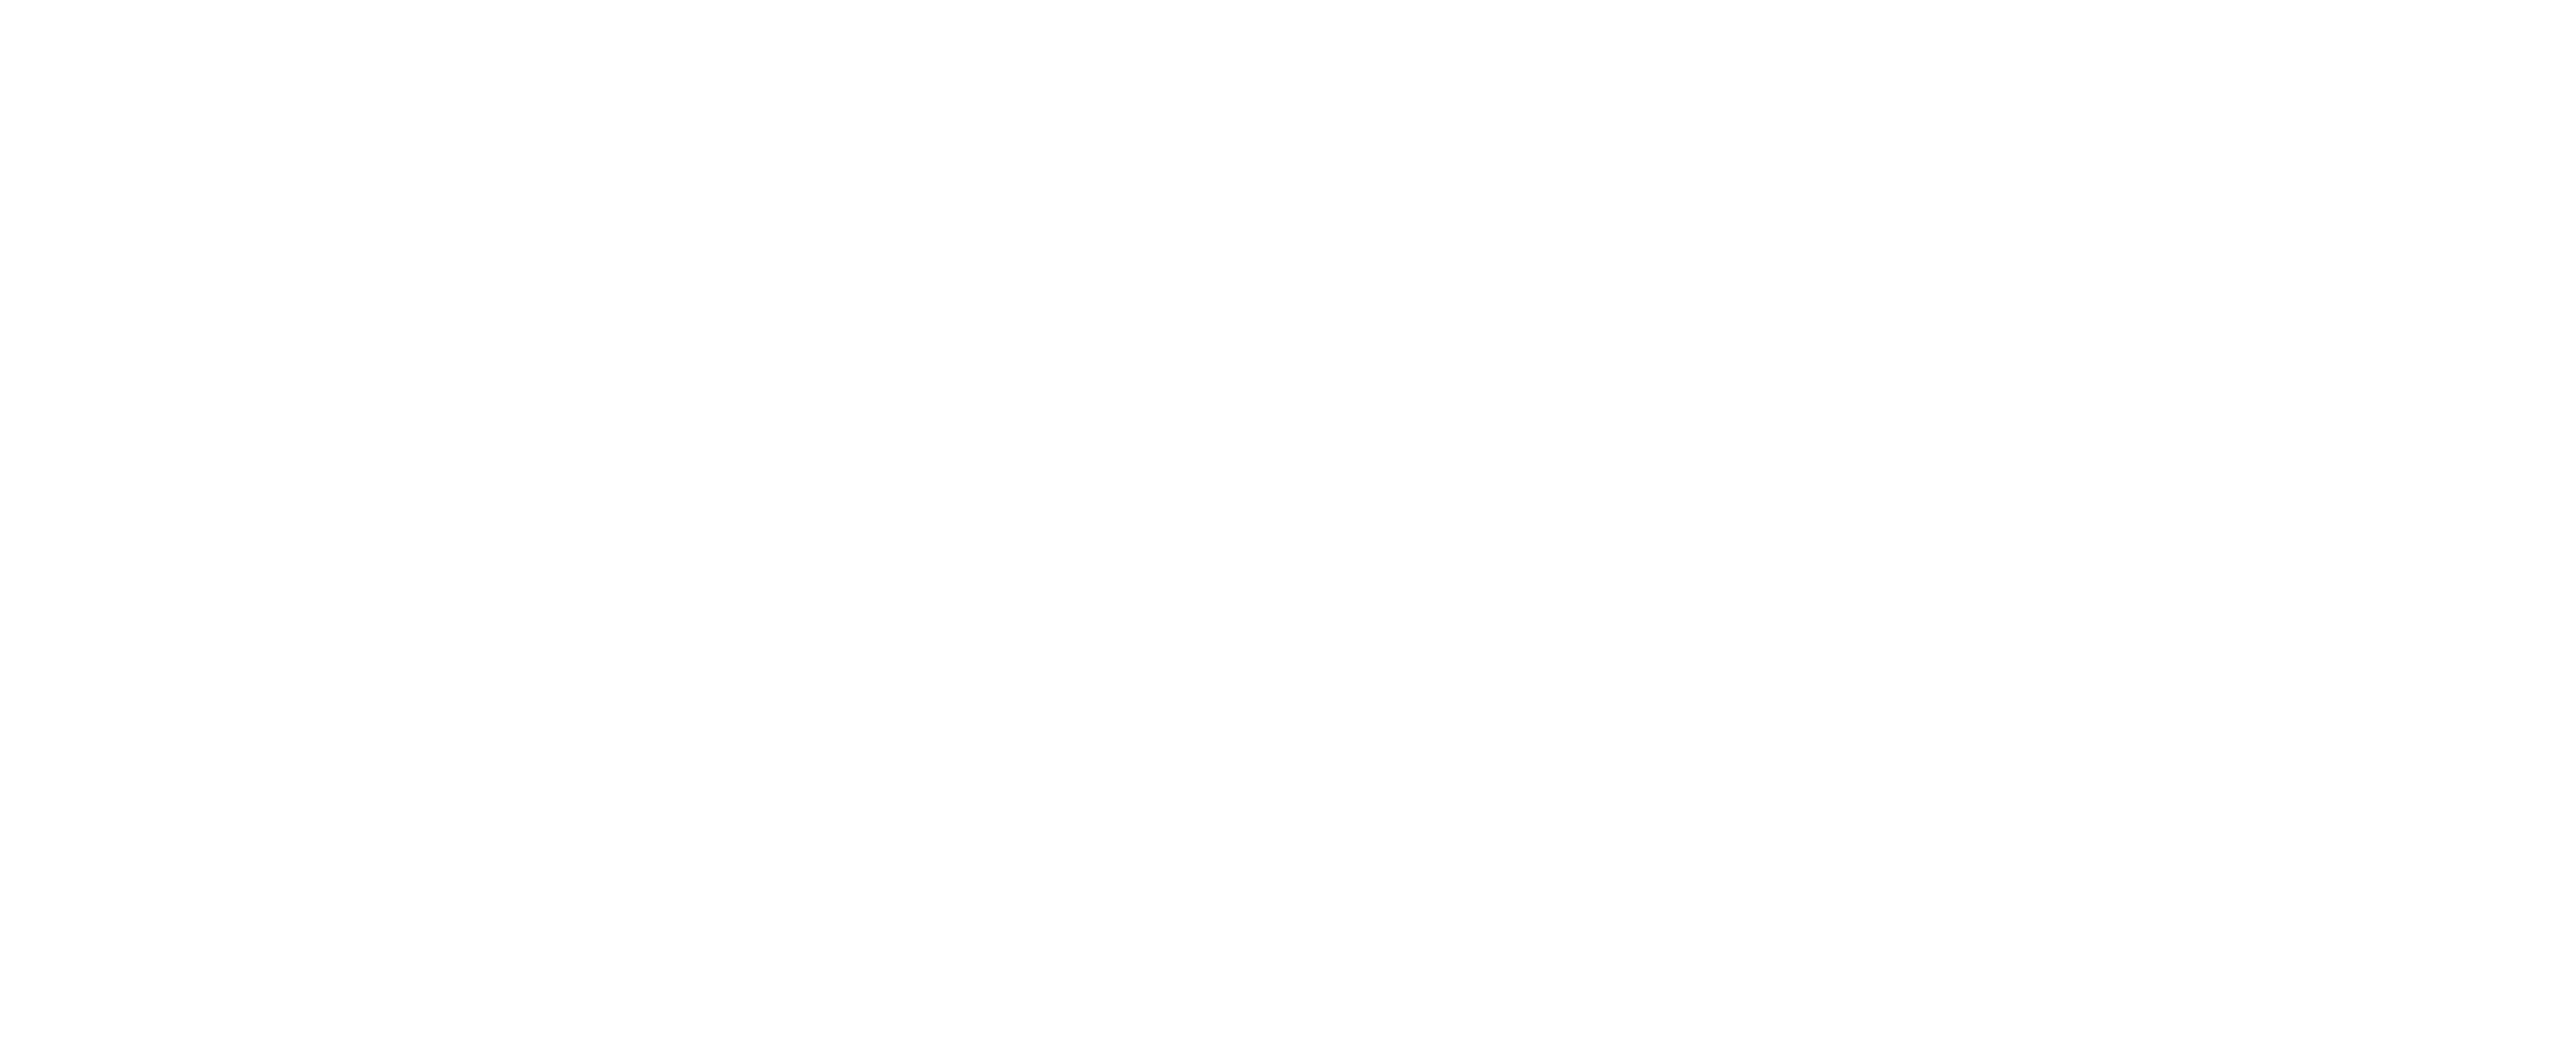 Streetwear for Gamers